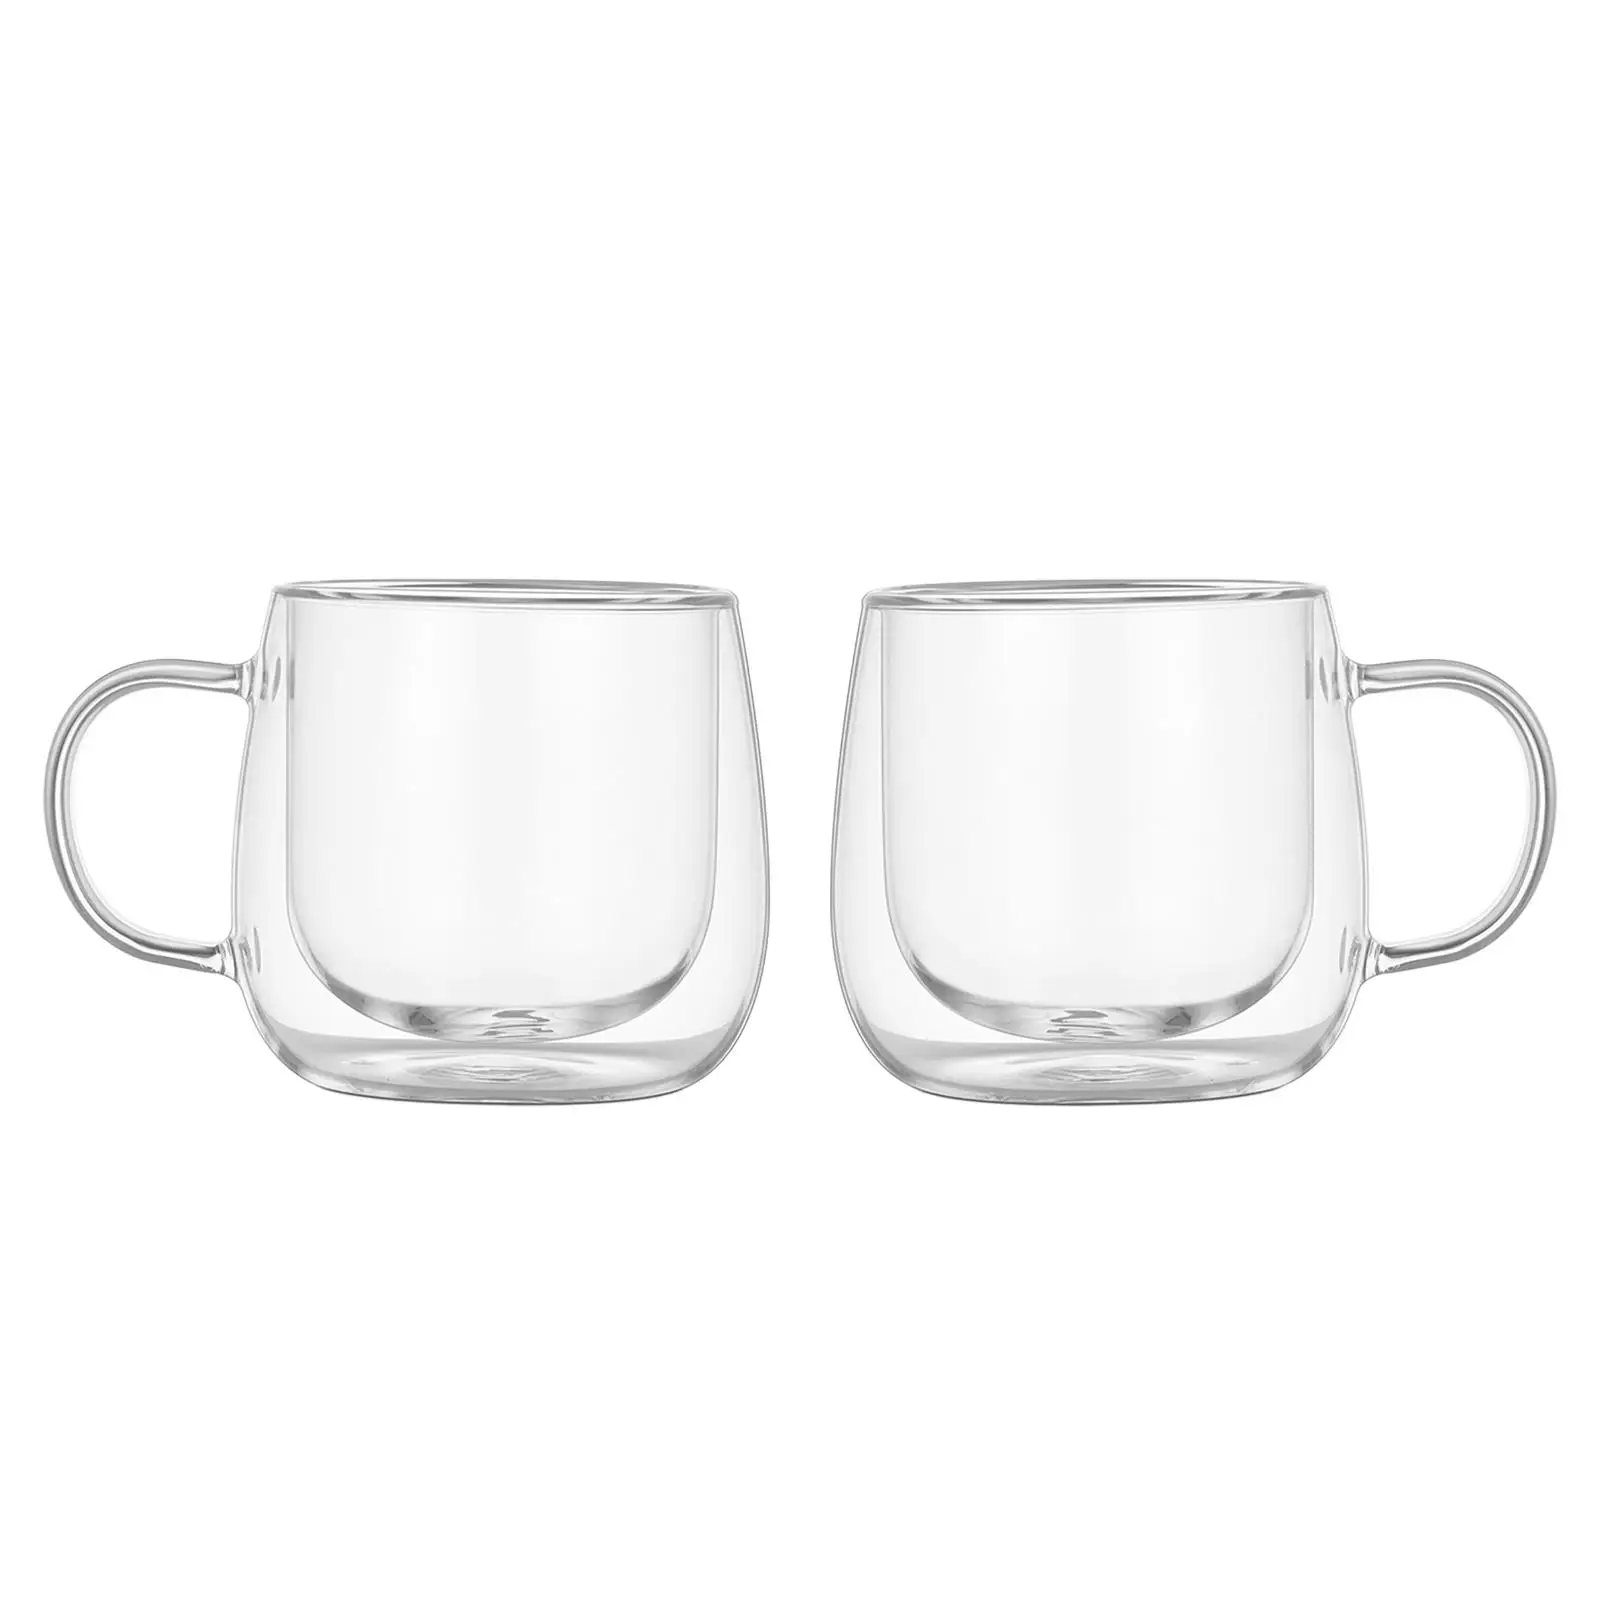 Anti-Scalding Coffee Cup Double Wall Drink Mugs Borosilicate Glass for Ice Cream